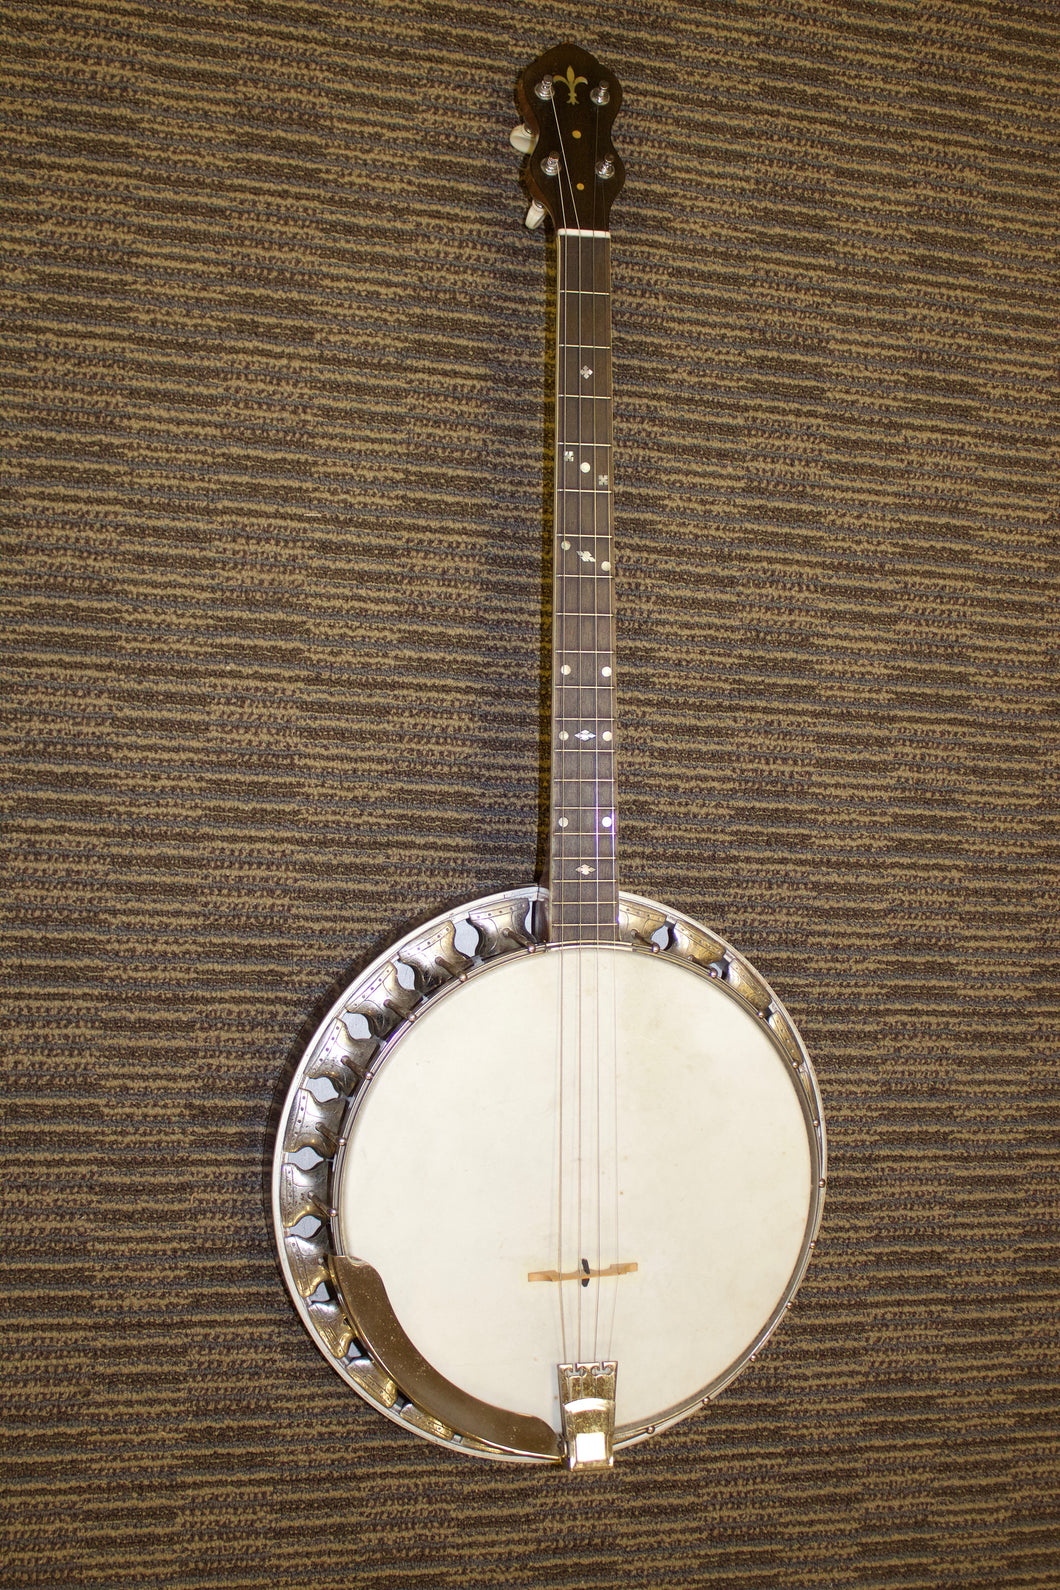 Regal Tenor Banjo c. 1930 w/ Resonator and Marquetry